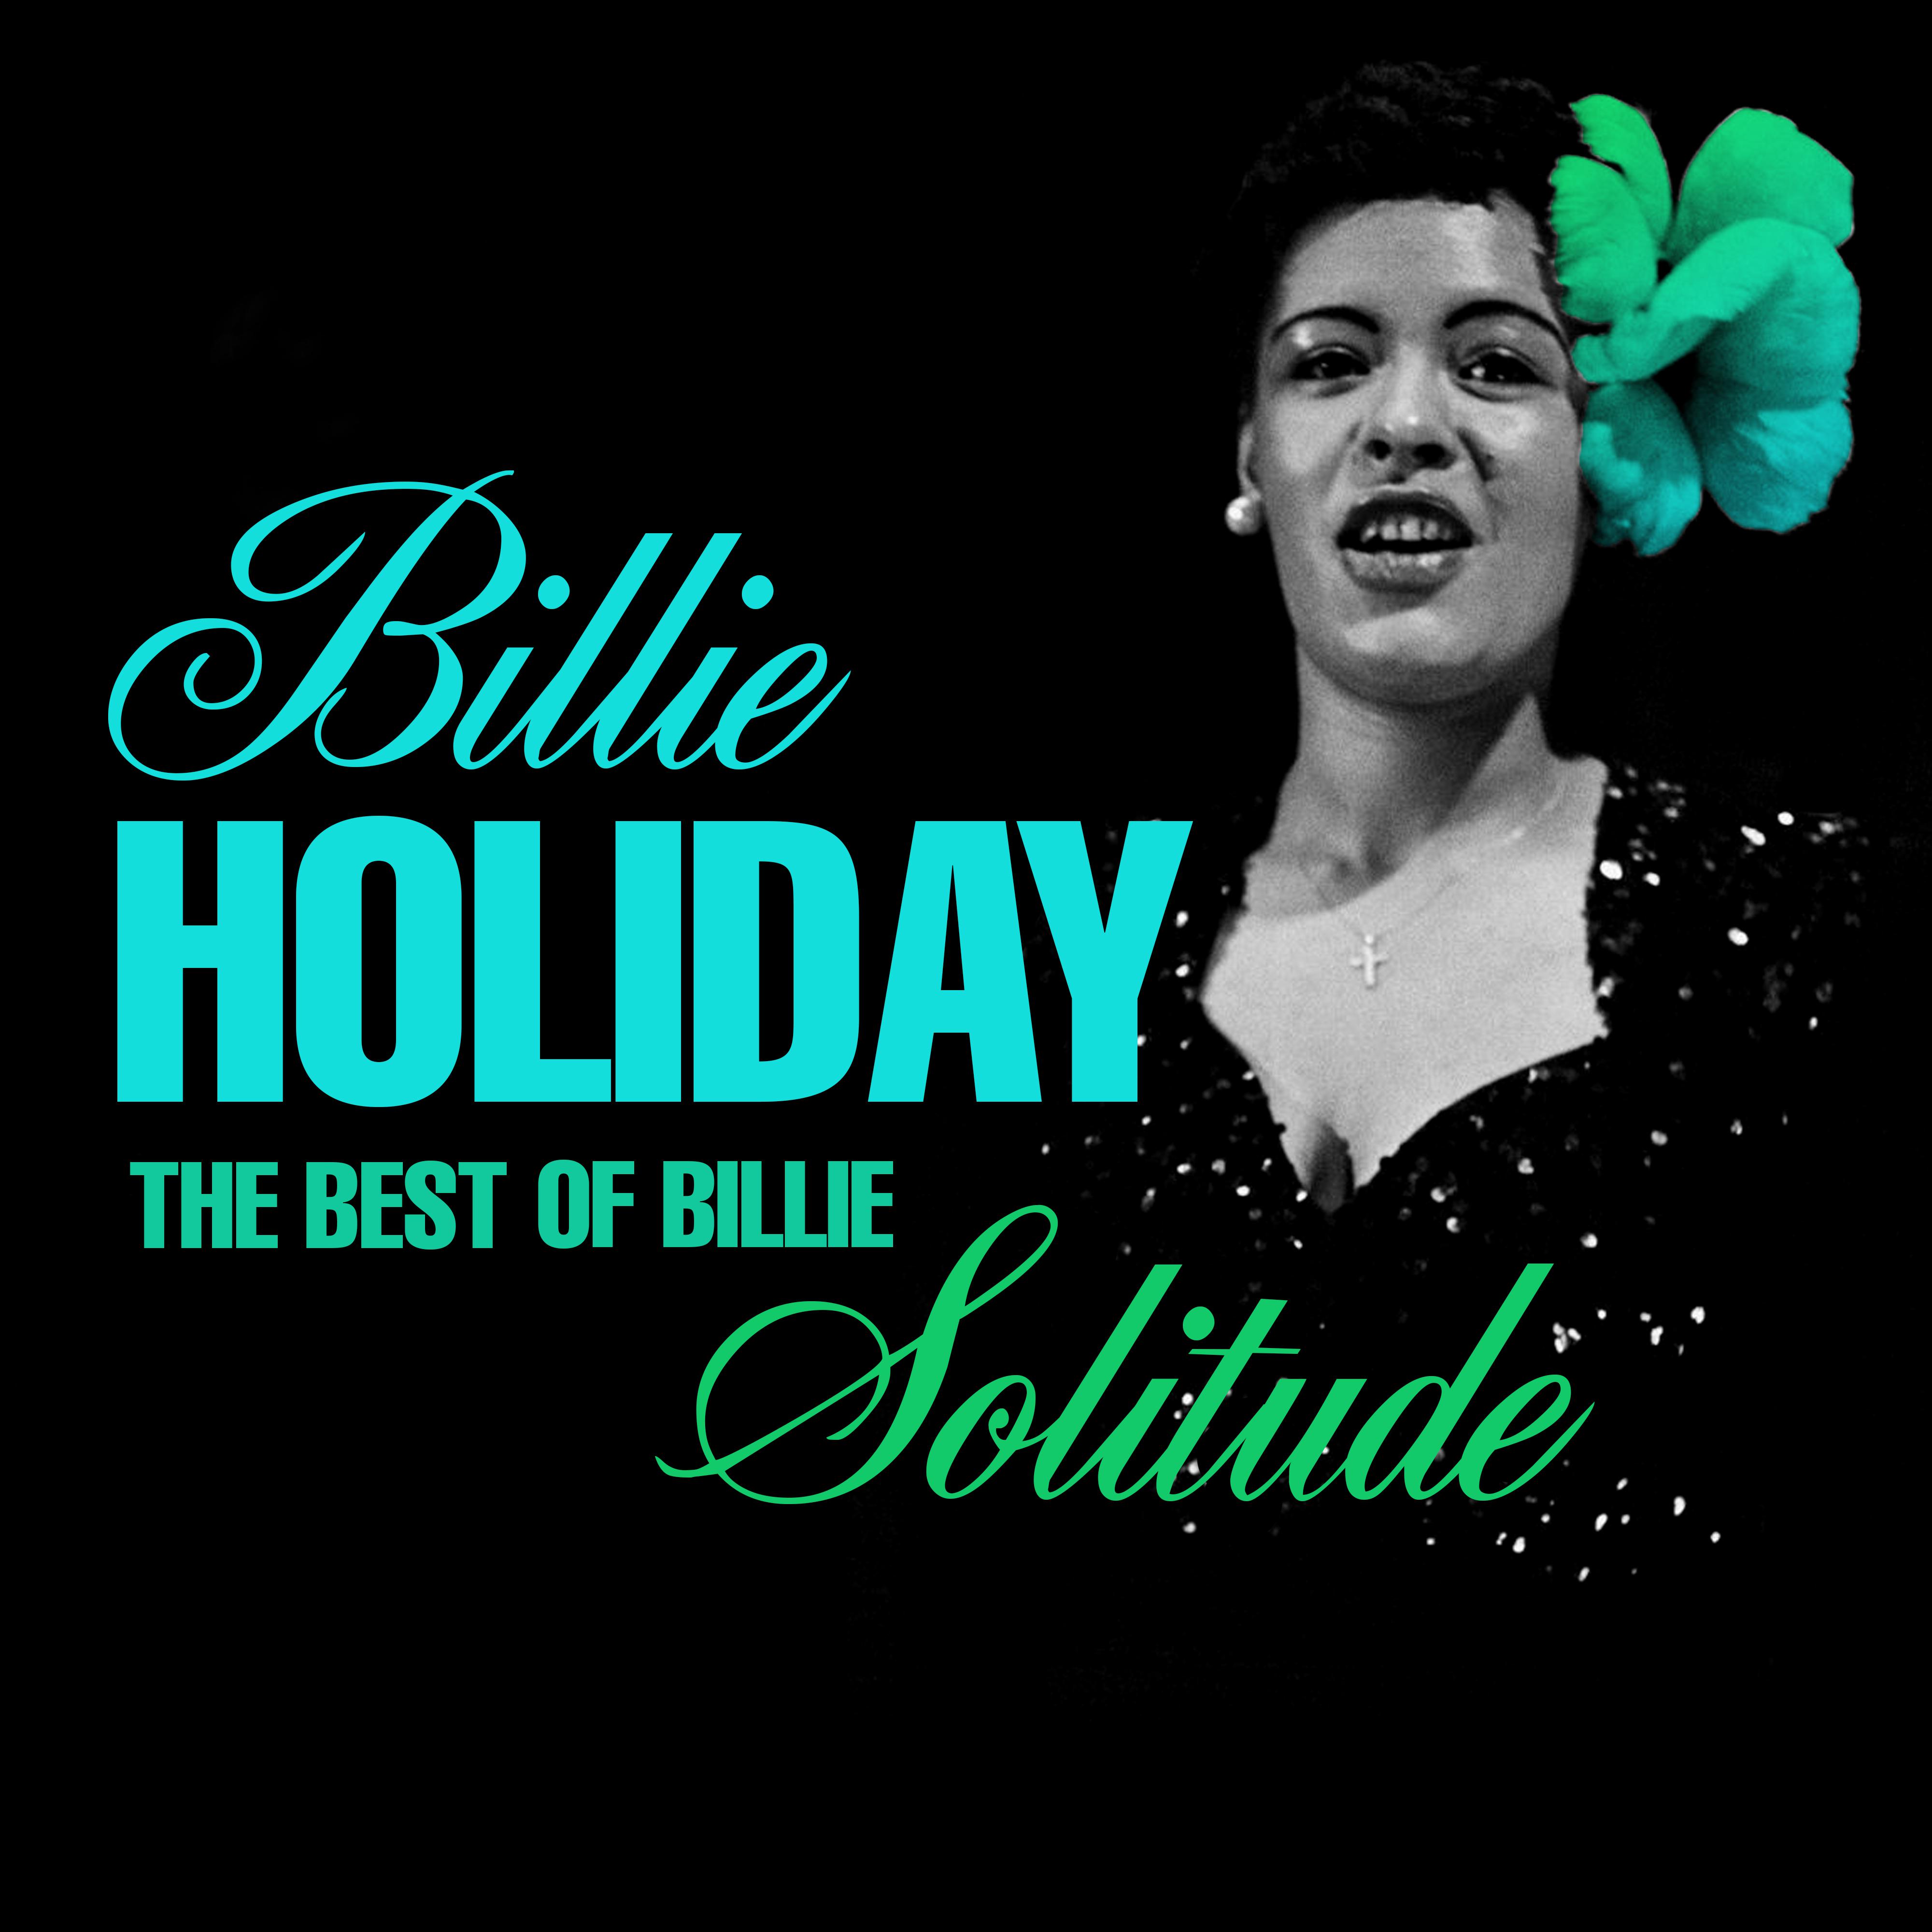 The Best Of Billie - Solitude